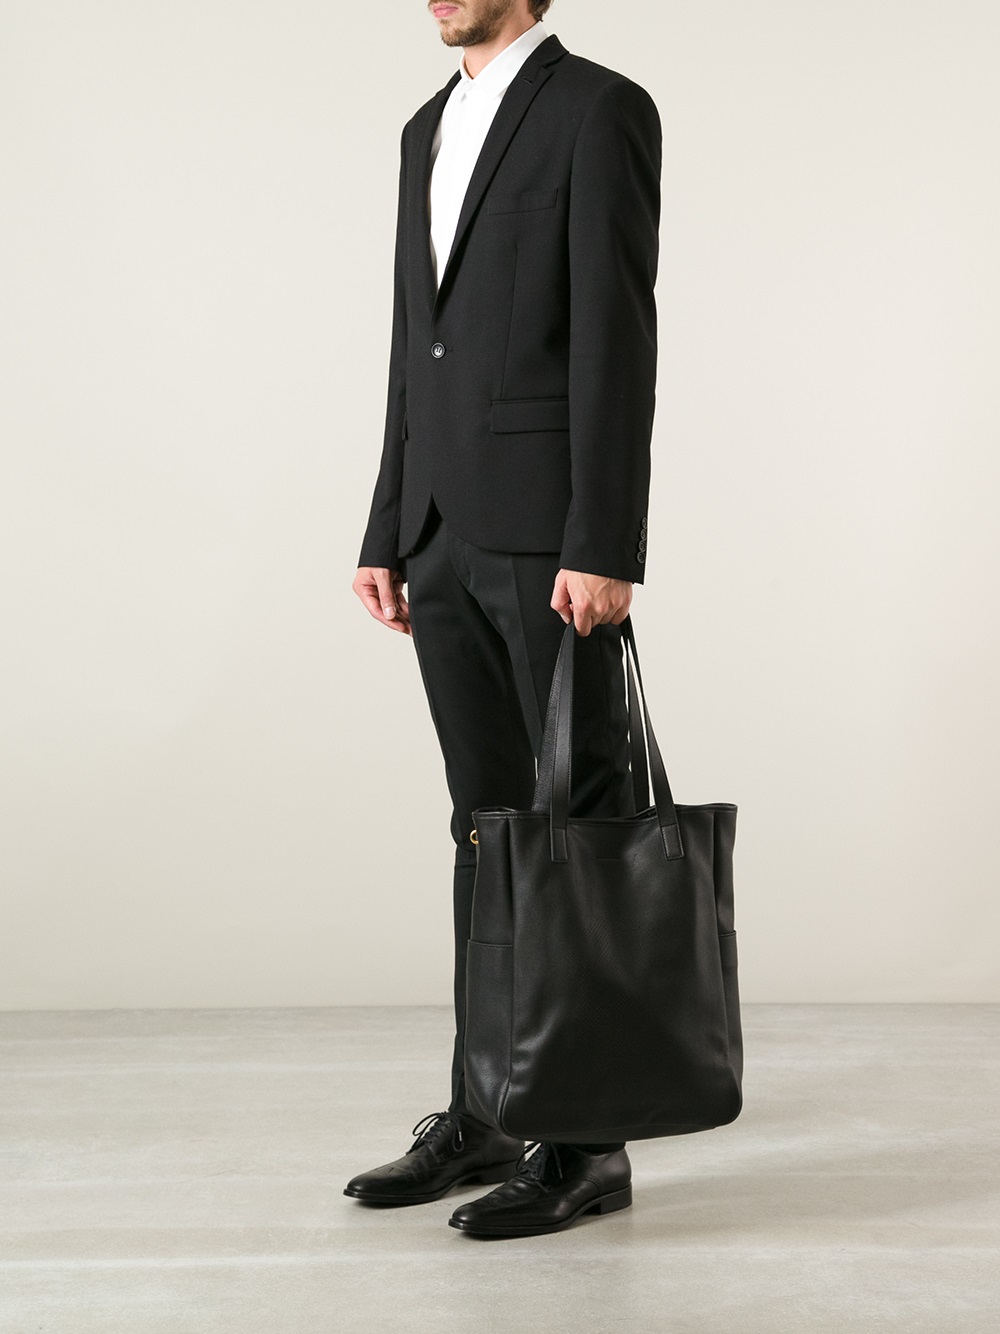 Lyst - Alexander McQueen Shopper Tote Bag in Black for Men